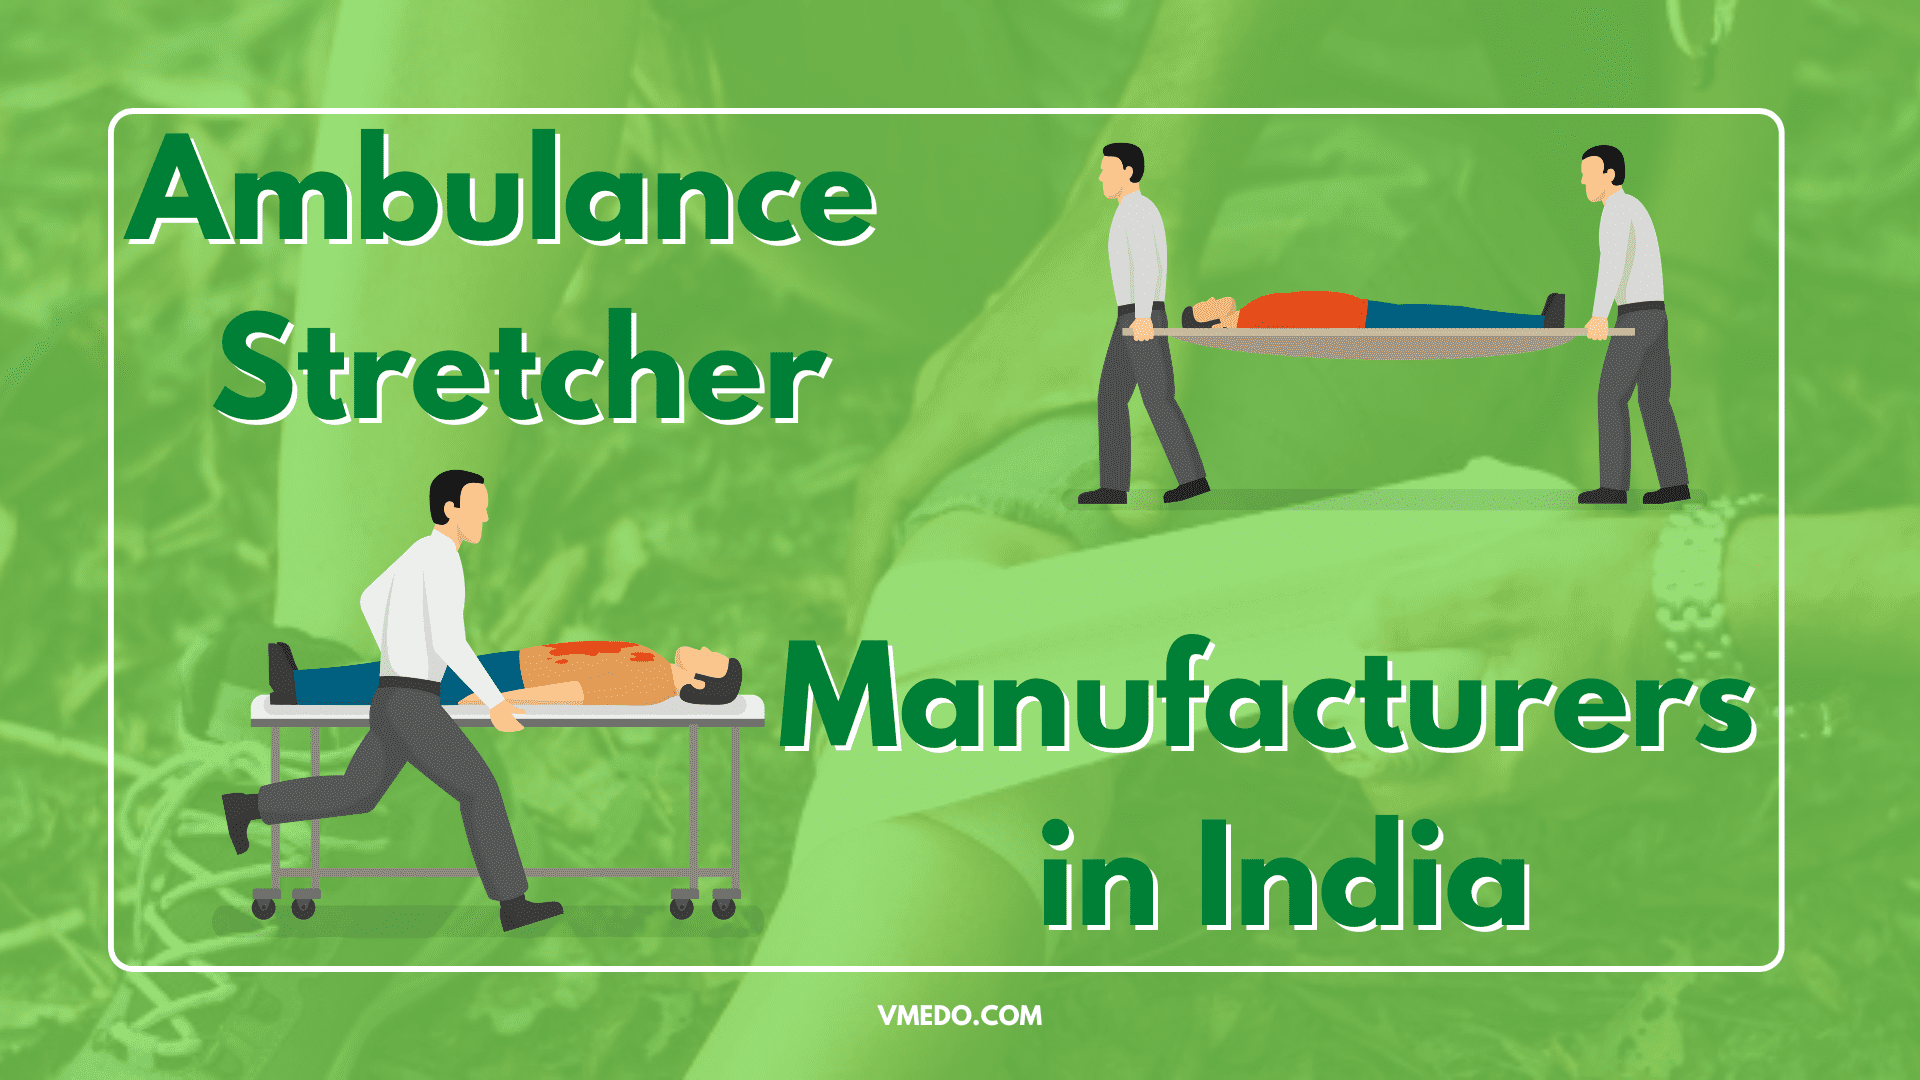 Ambulance stretcher manufacturer in india